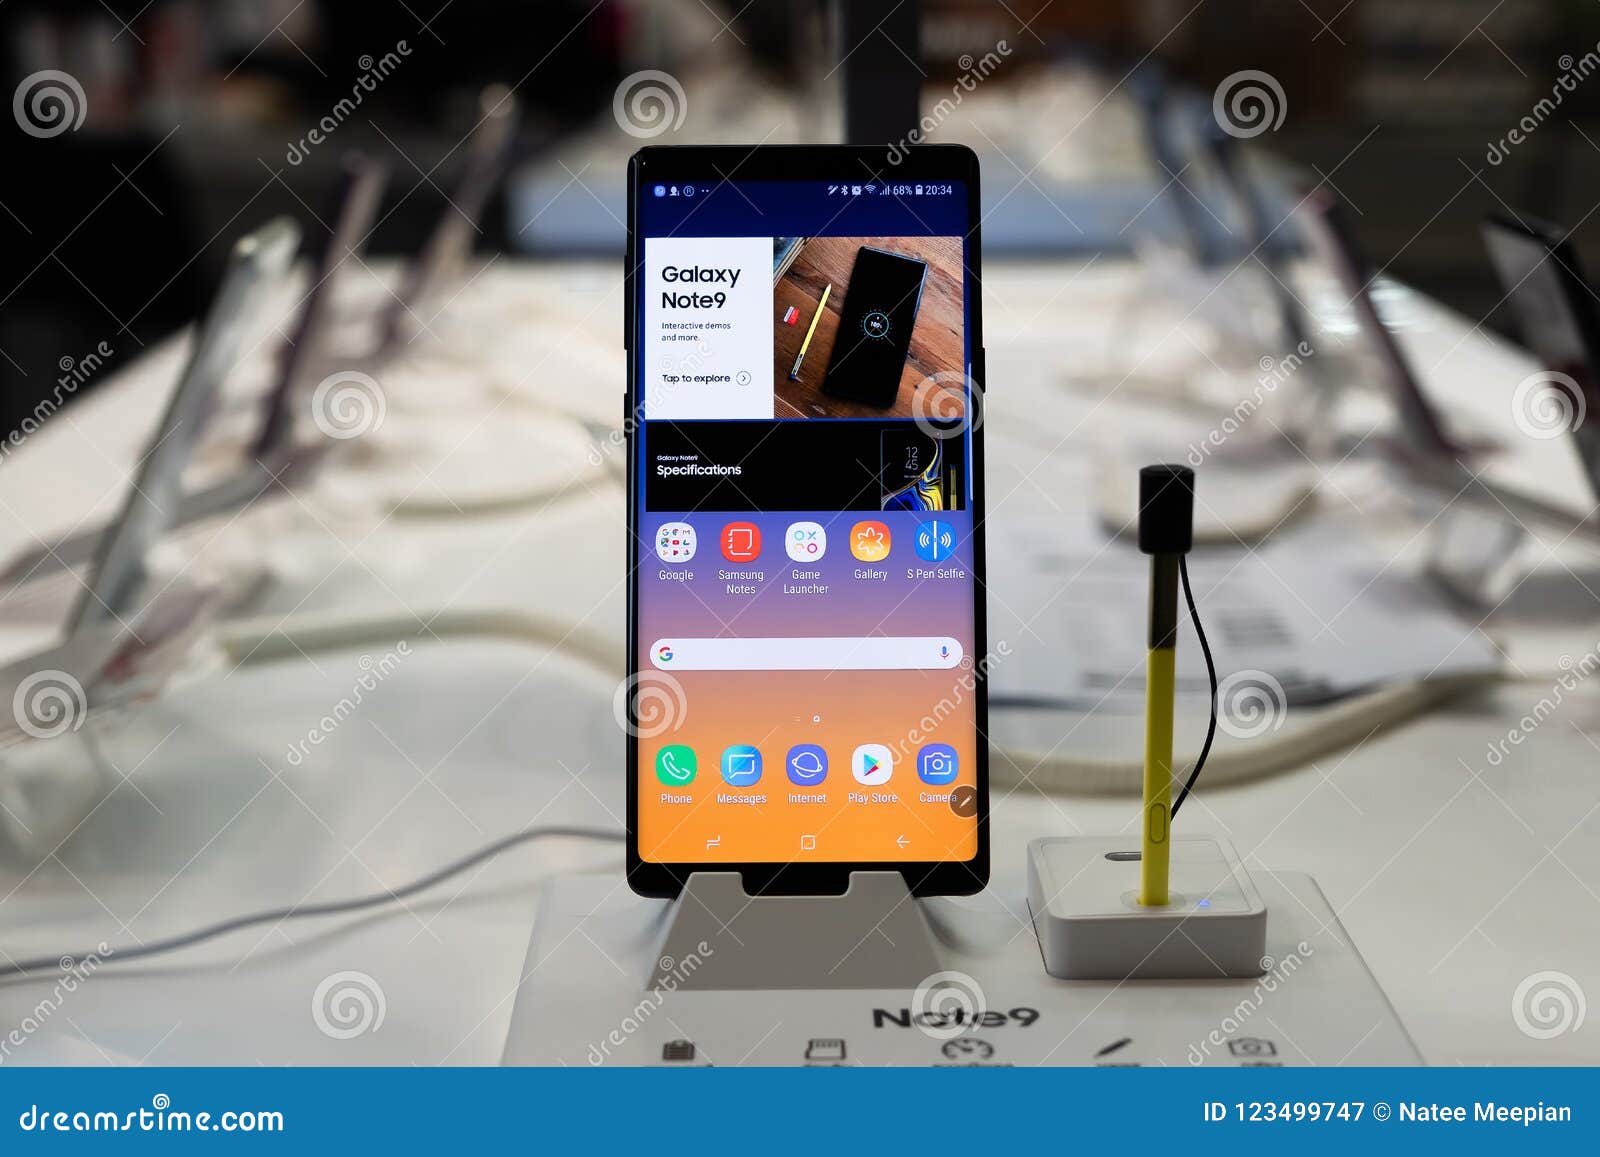 87+ Gambar Samsung Galaxy Note 9 Paling Keren